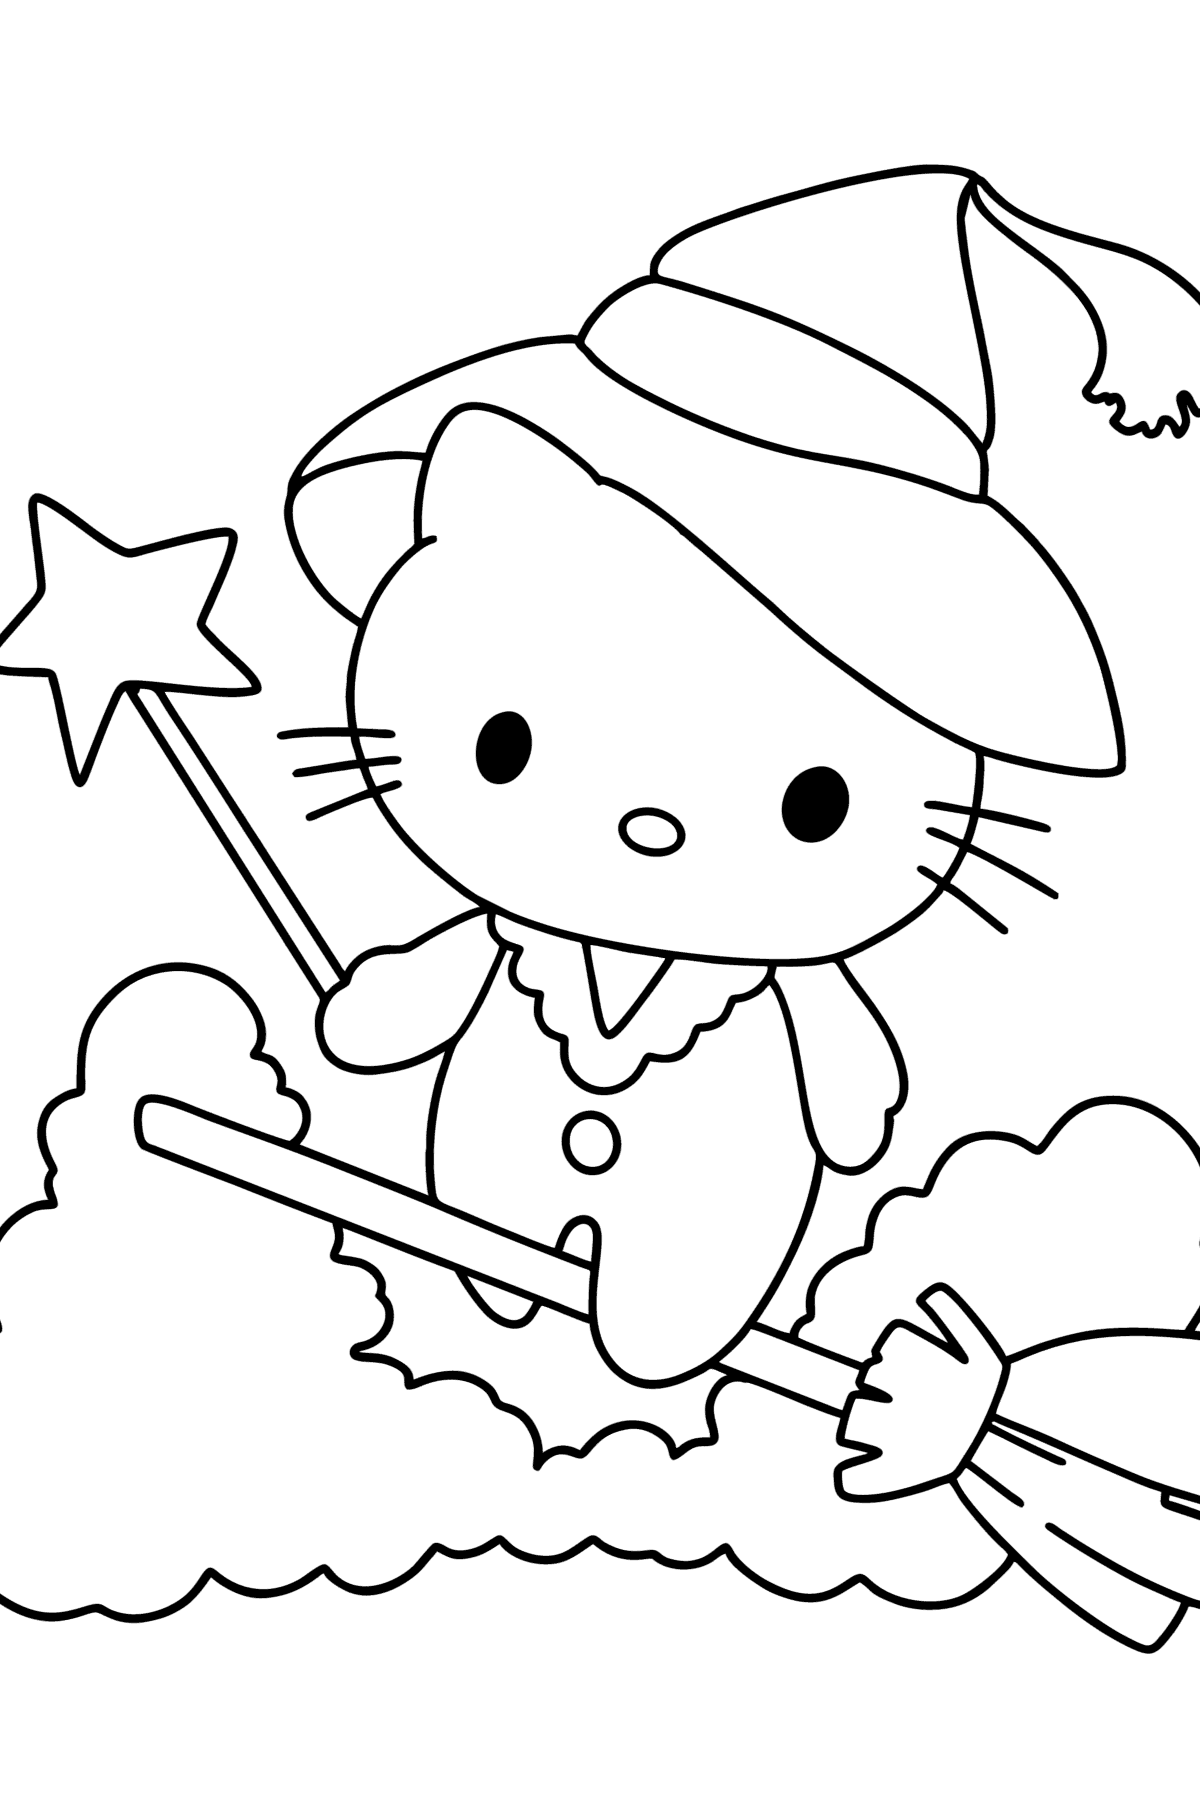 Раскраска Хелло Китти (Hello Kitty) на Хеллоуин - Картинки для Детей